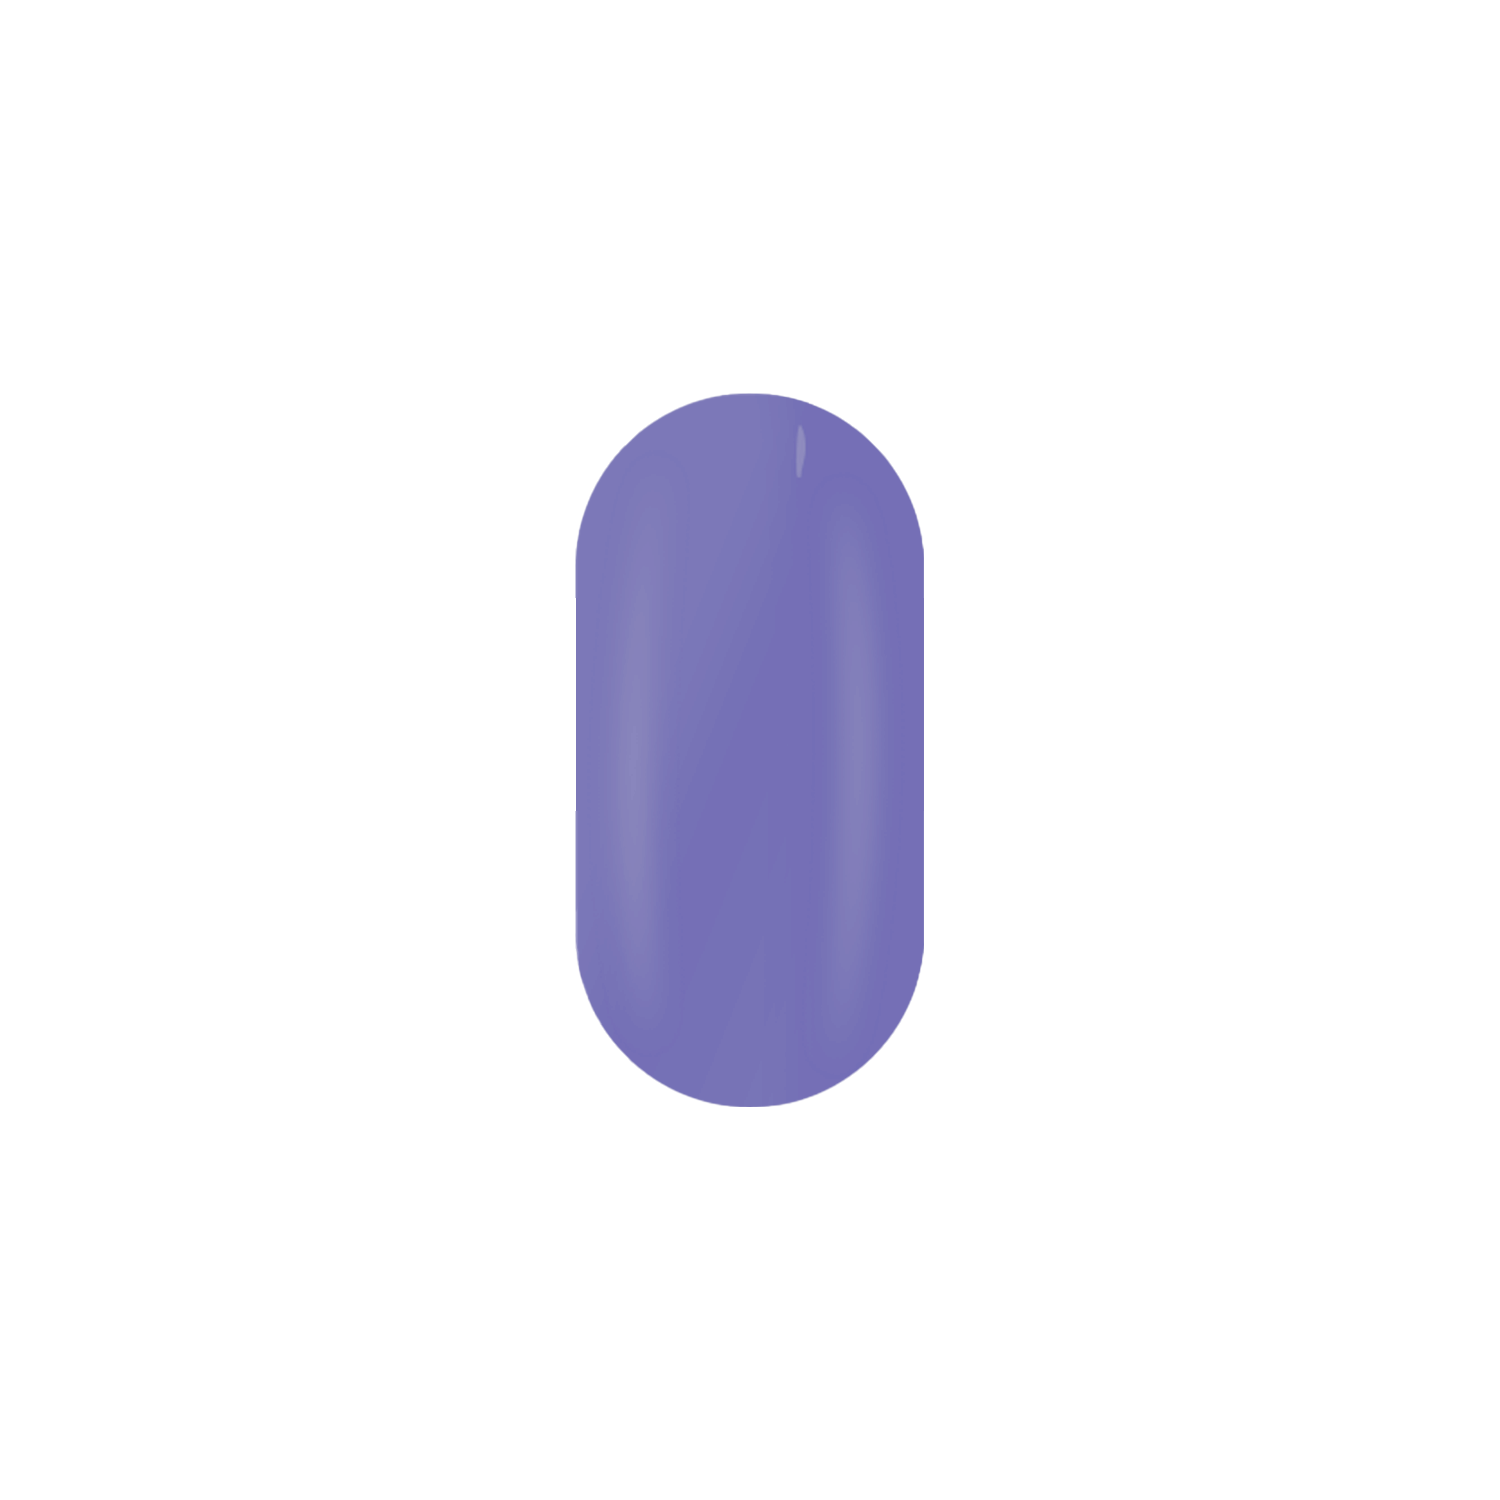 Lavender Lush